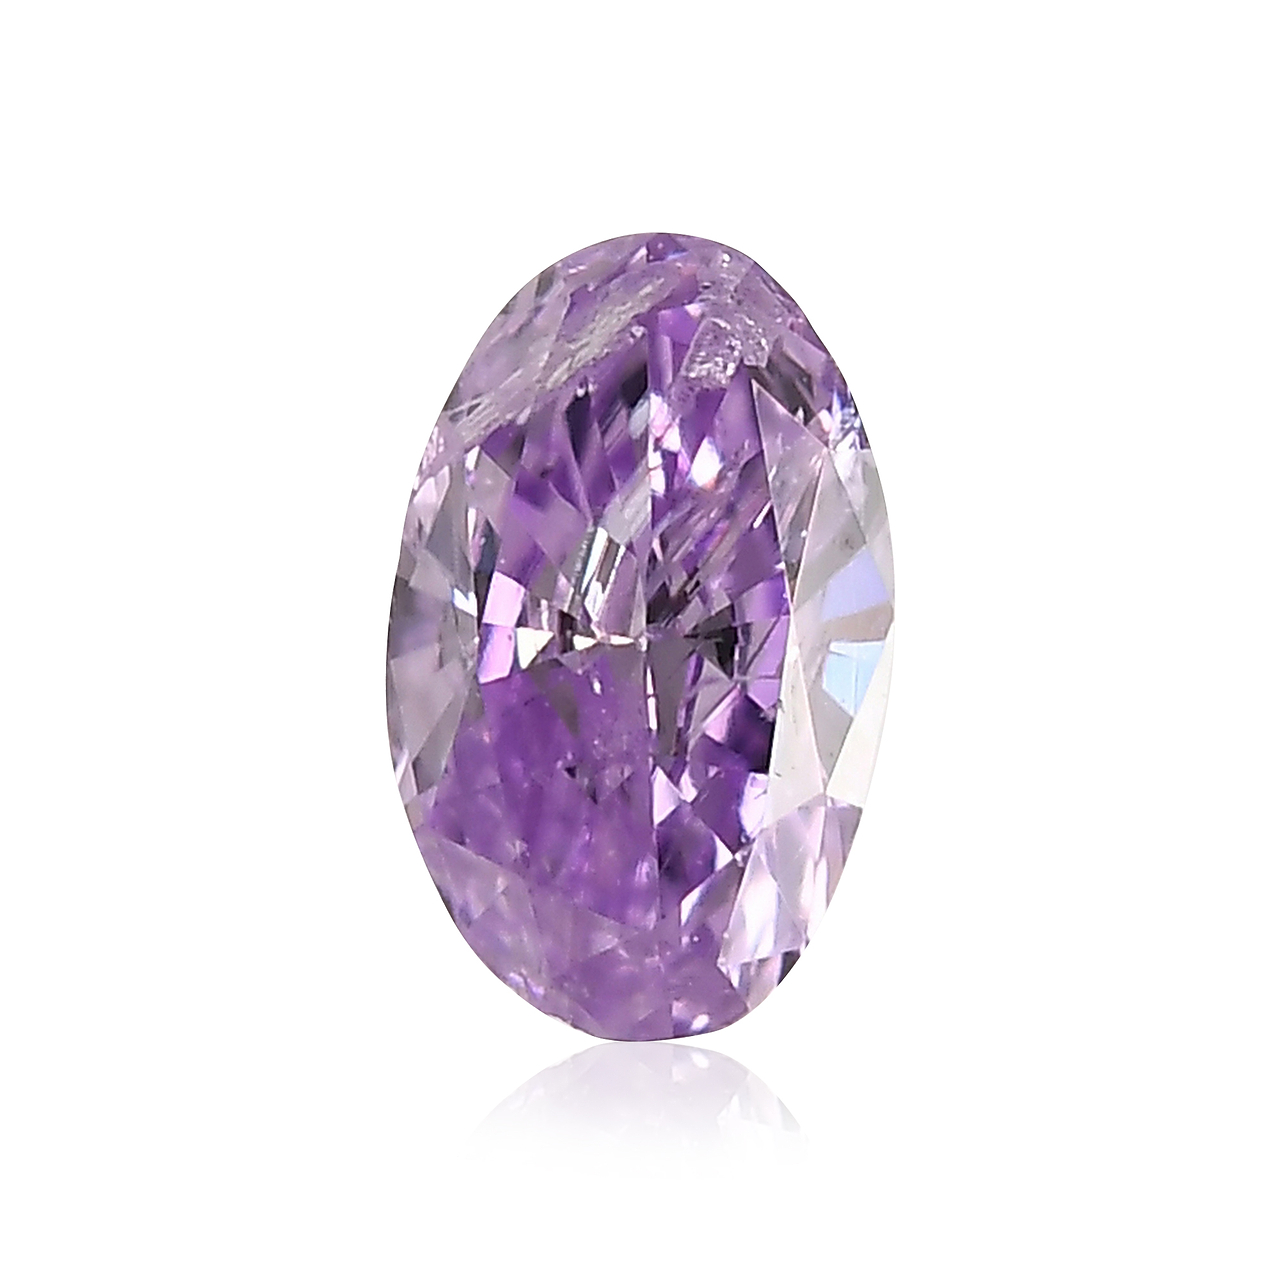 0.13 carat, Fancy Intense Pink Purple Diamond, Oval Shape, (I3) Clarity,  GIA, SKU 508582